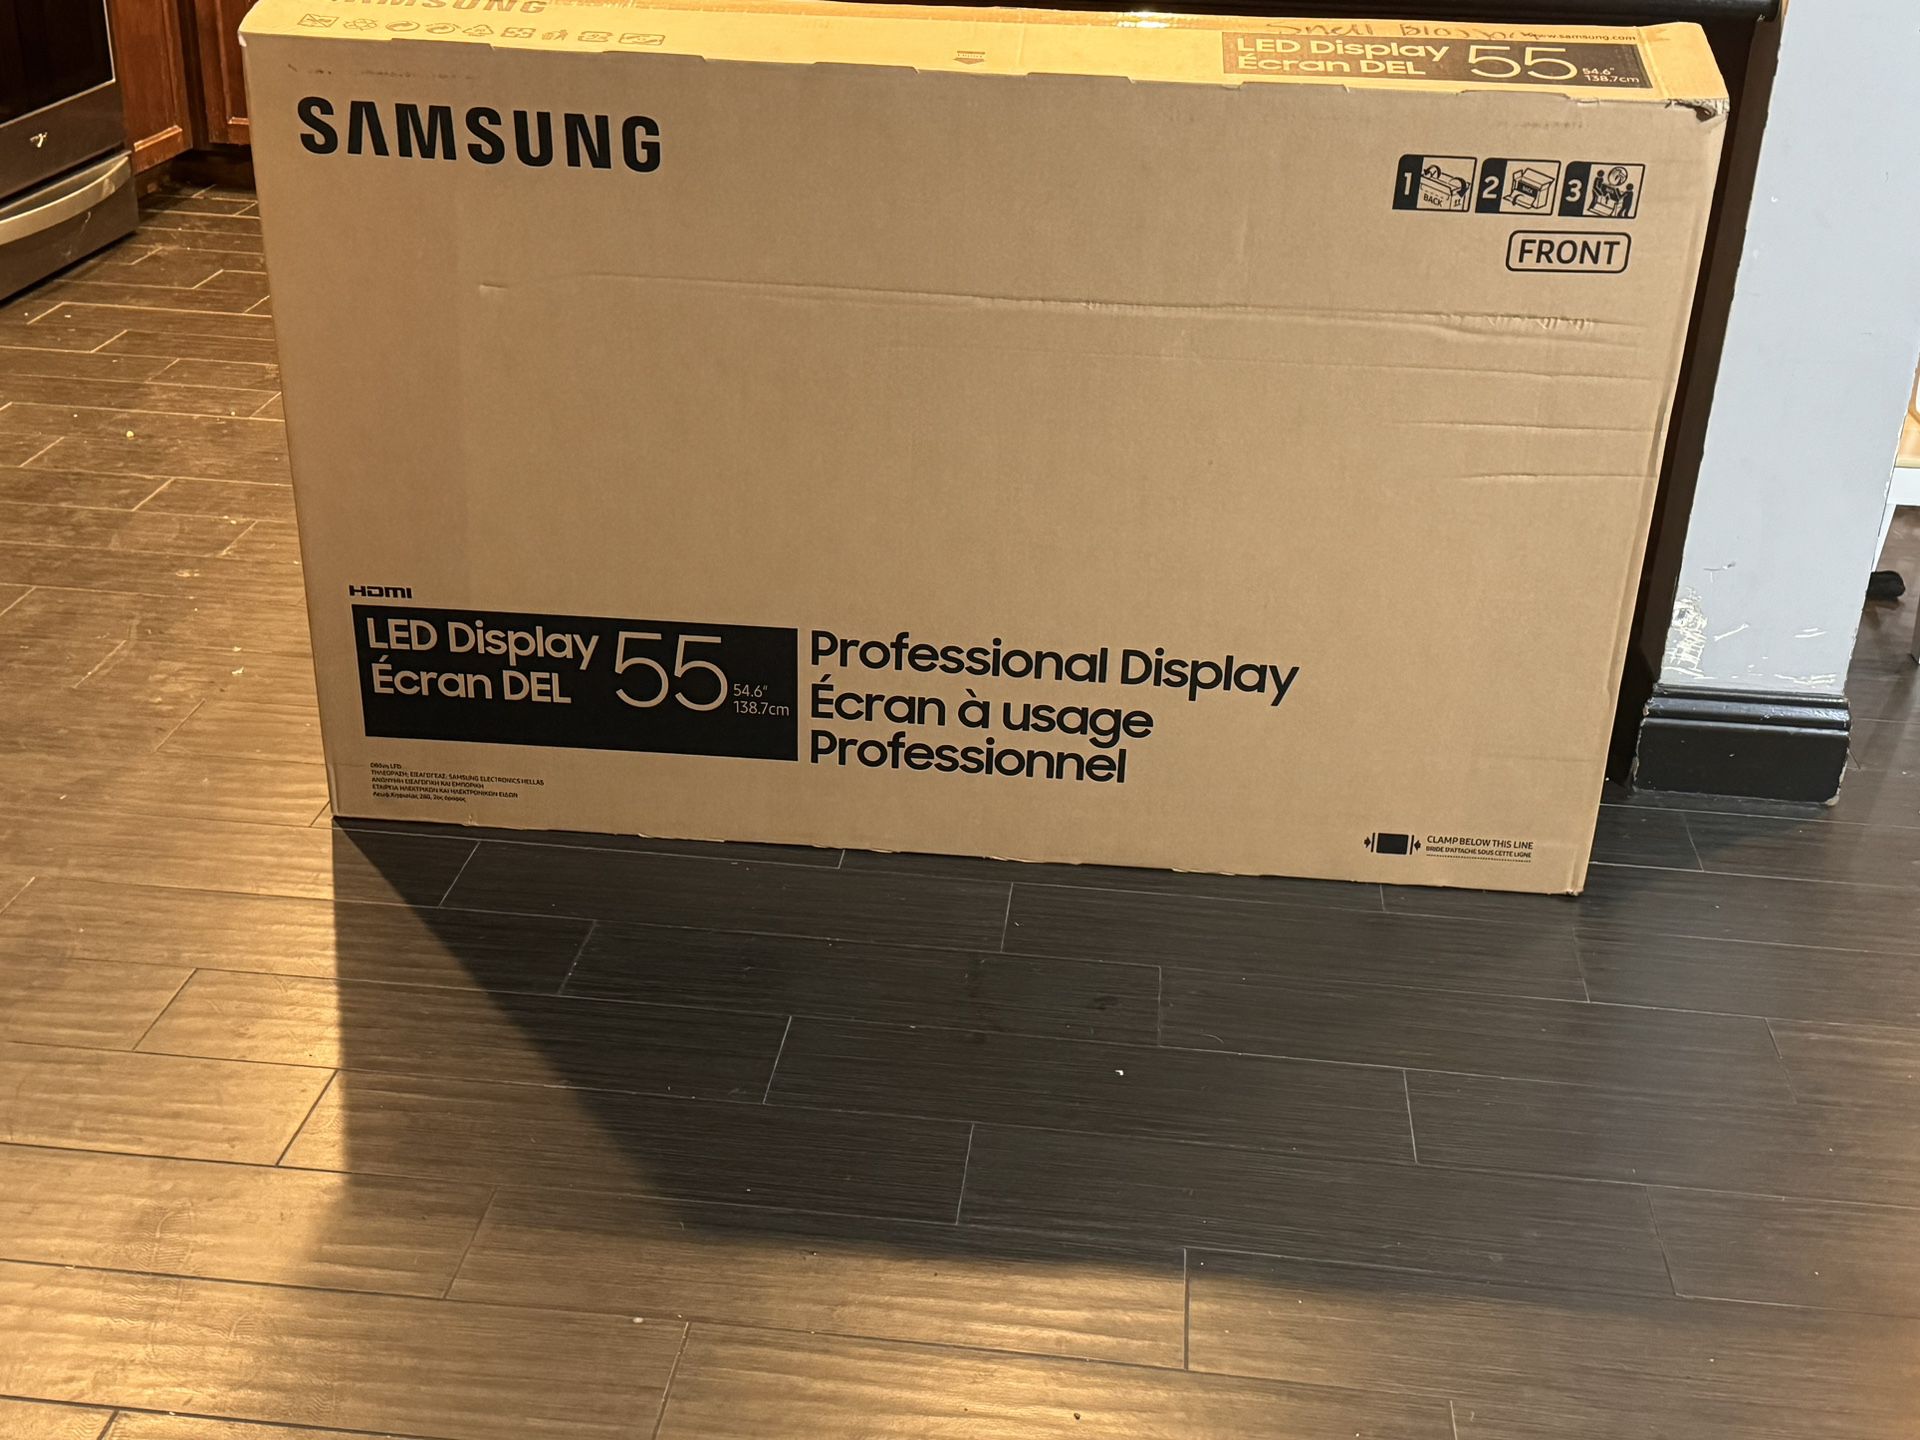 55 Inch Professional Display Samsung 